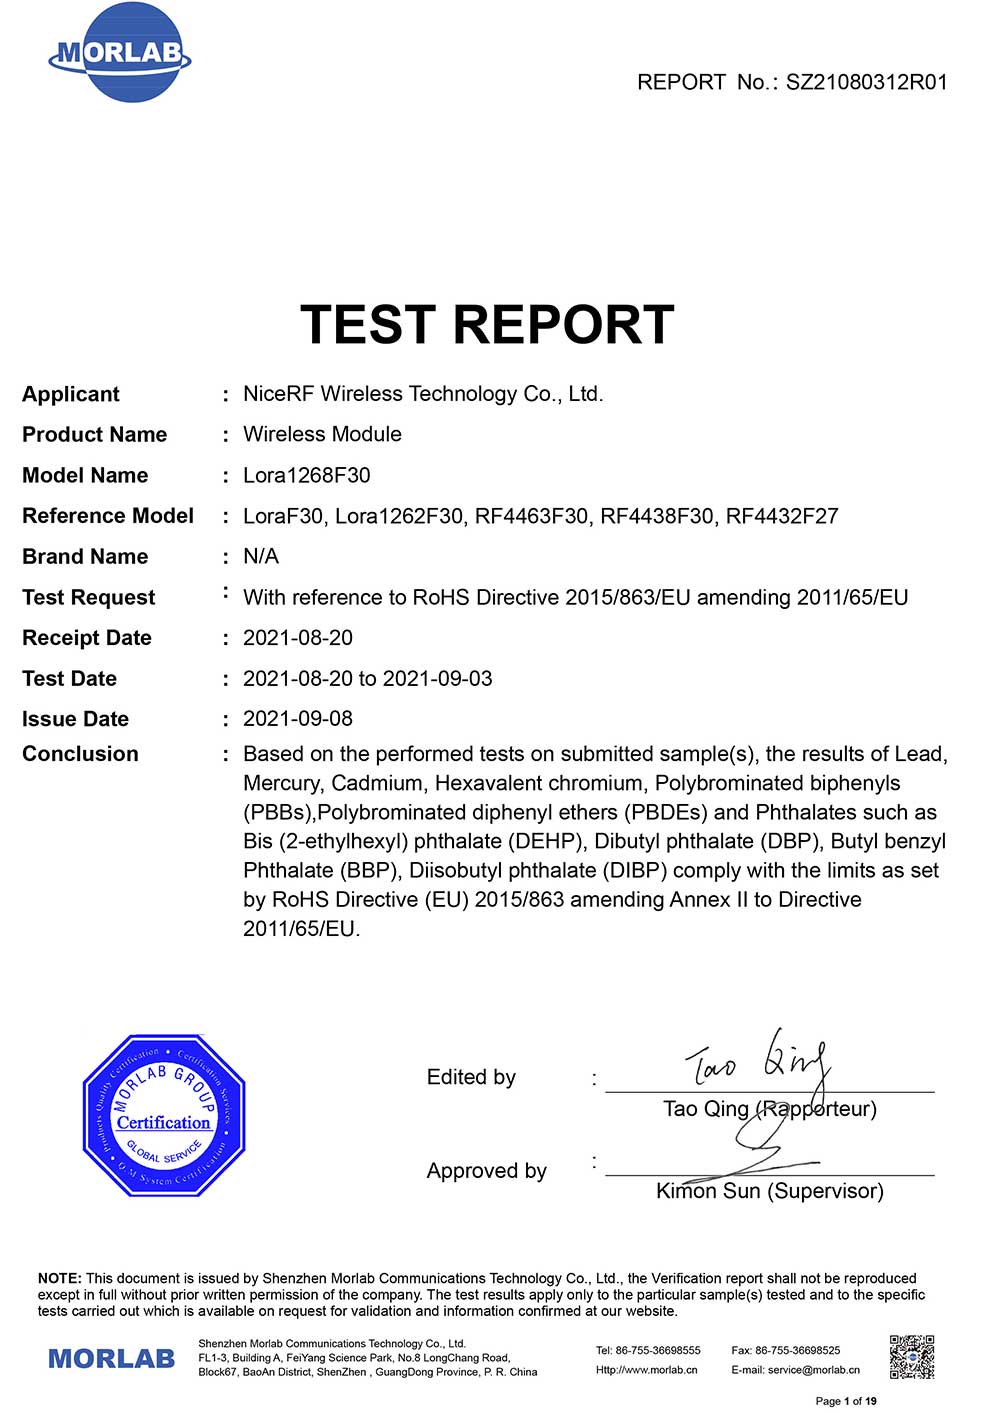 LoRa1268F30 ROHS certification